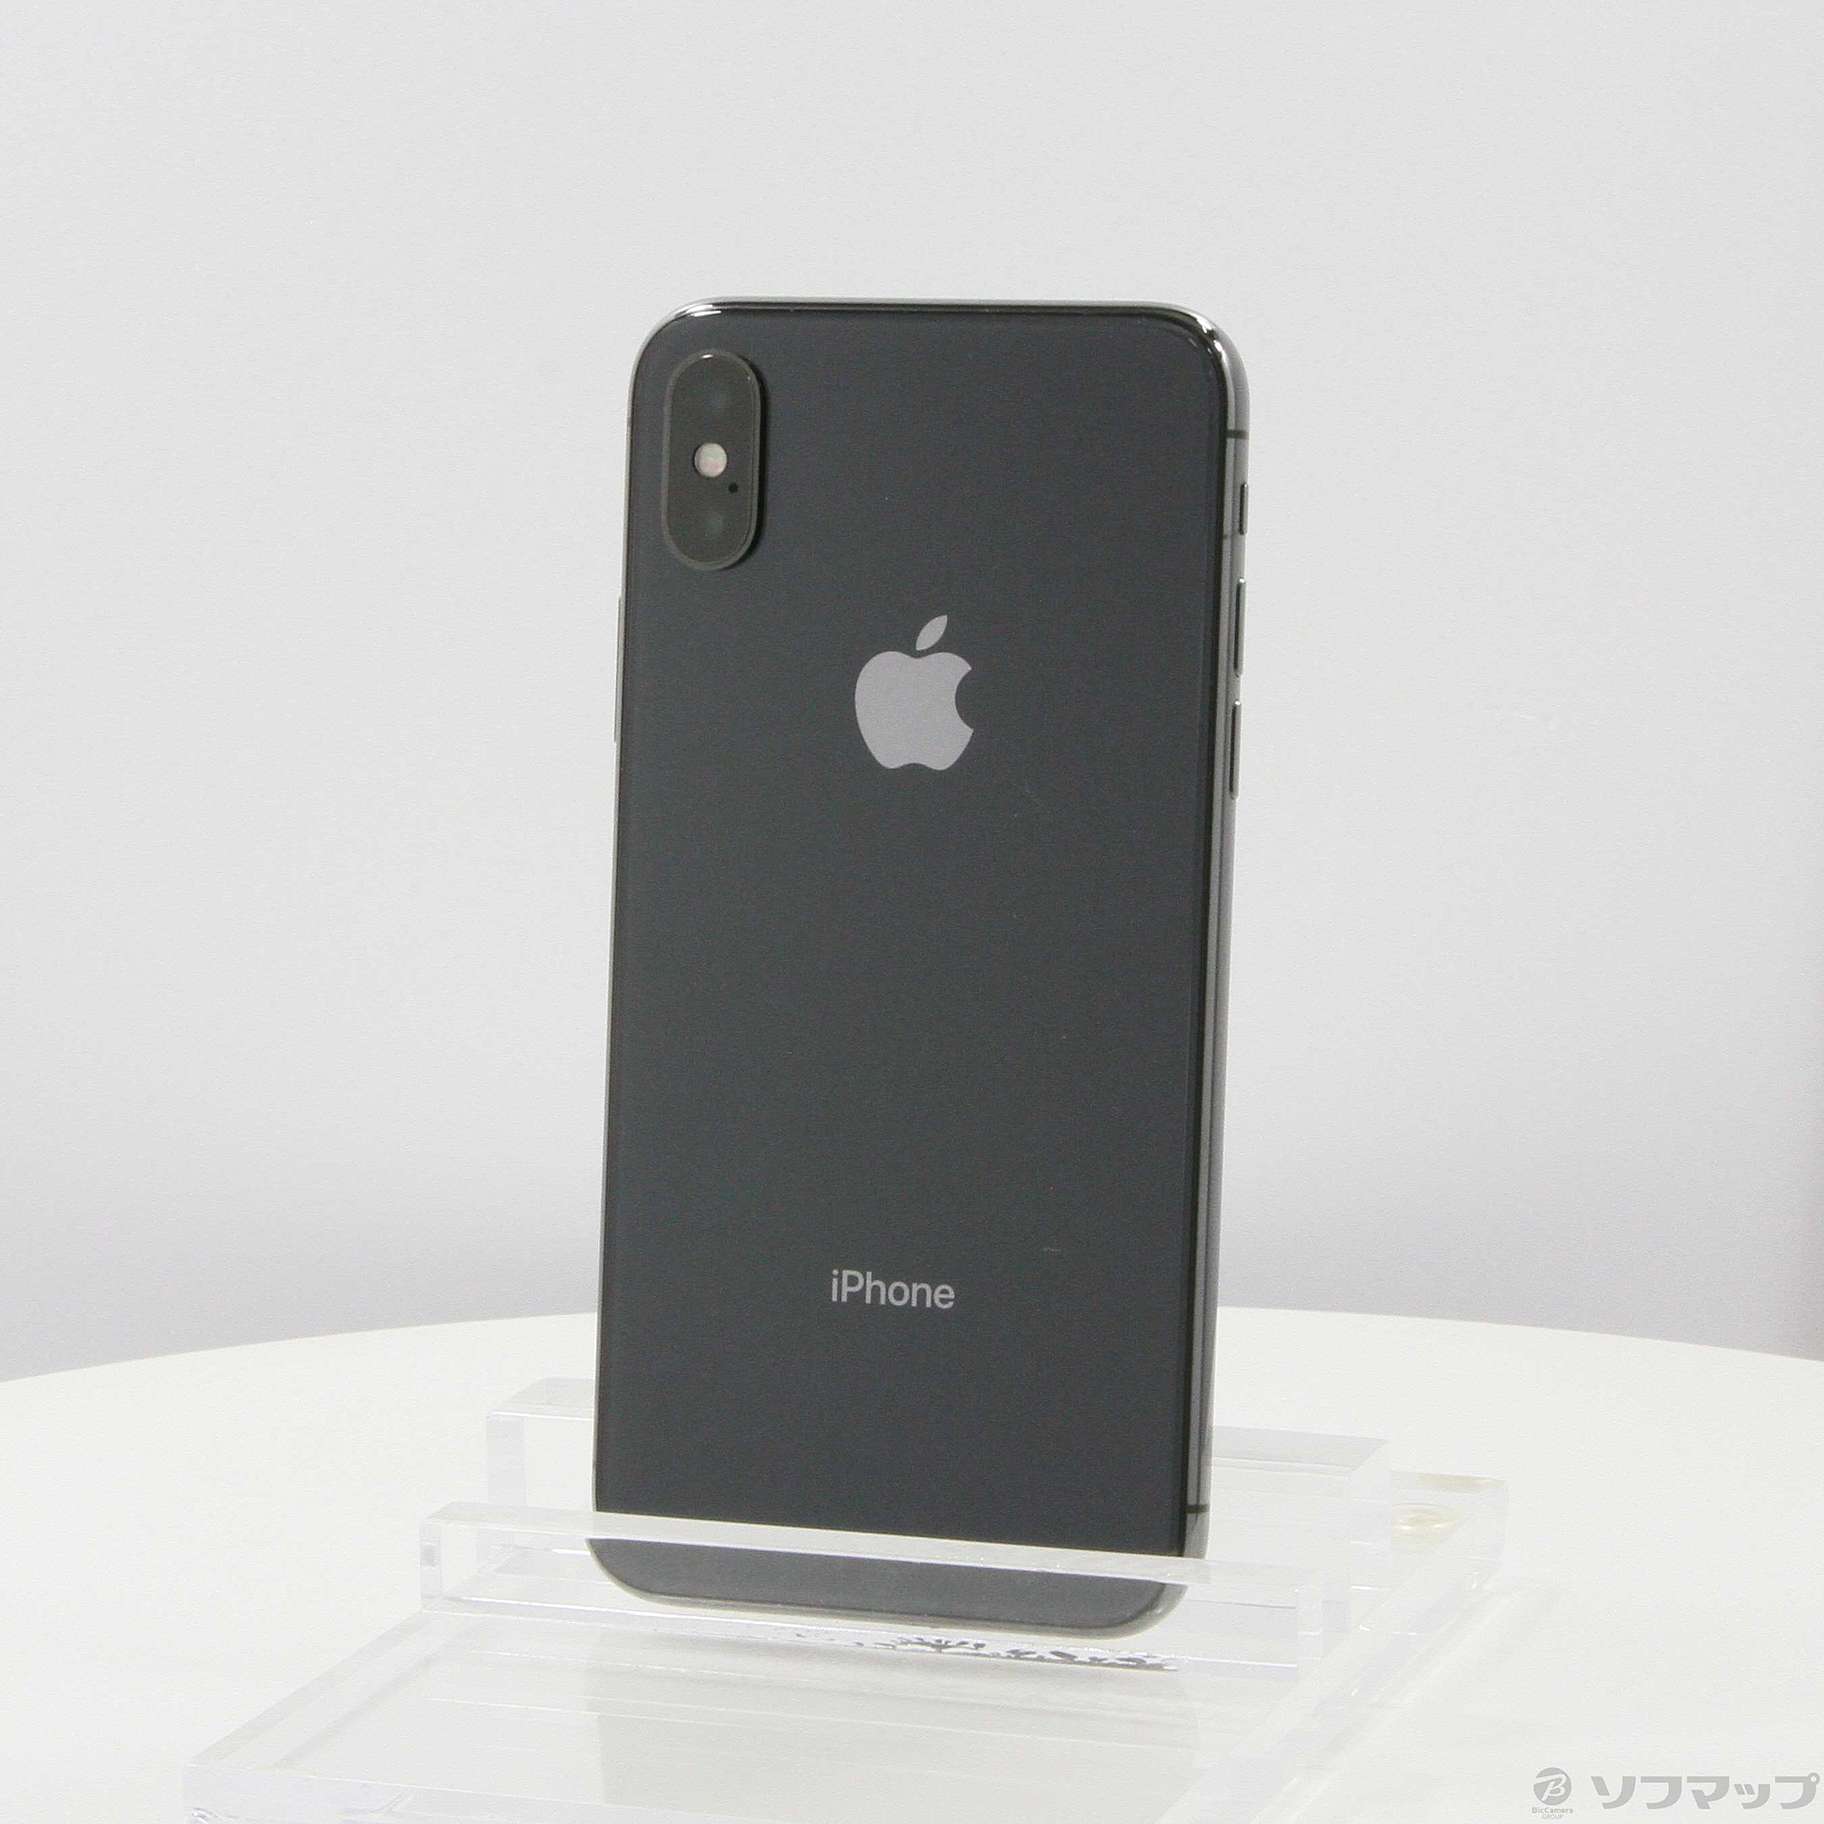 iPhone X Space Gray 256 GB Softbank - 5